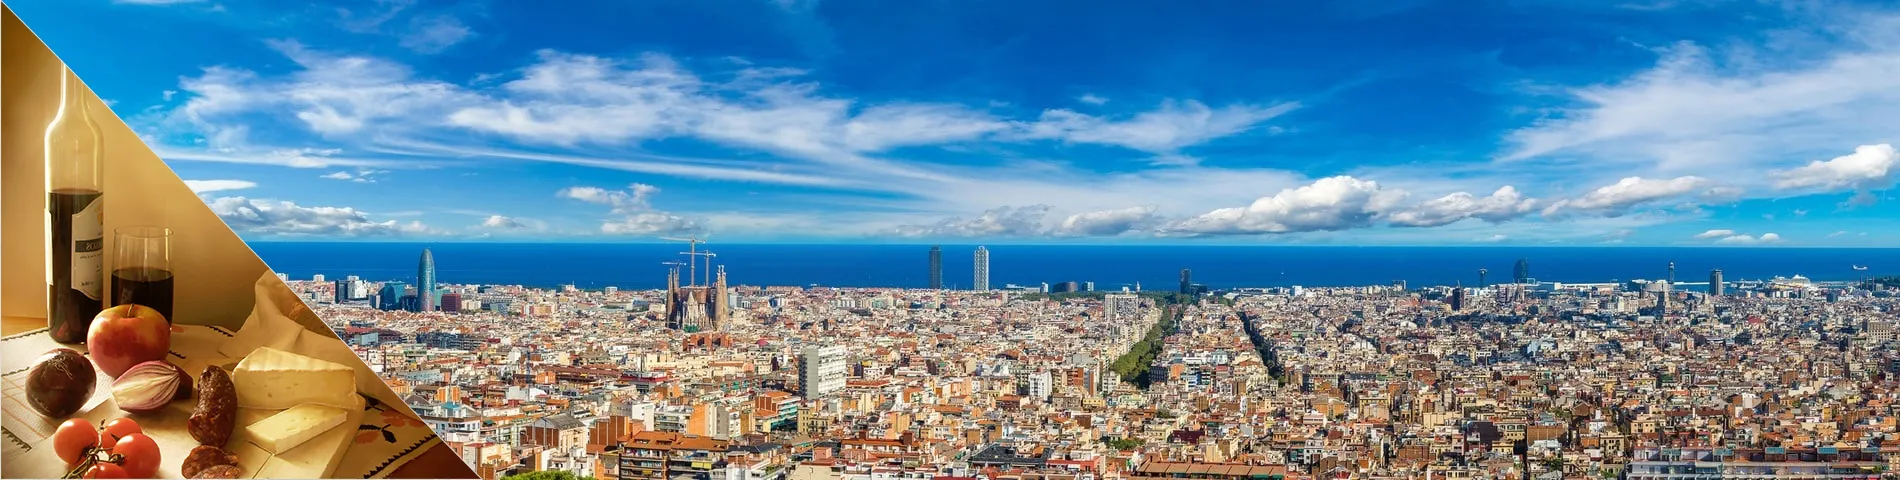 Barcelona - Spanish & Culture